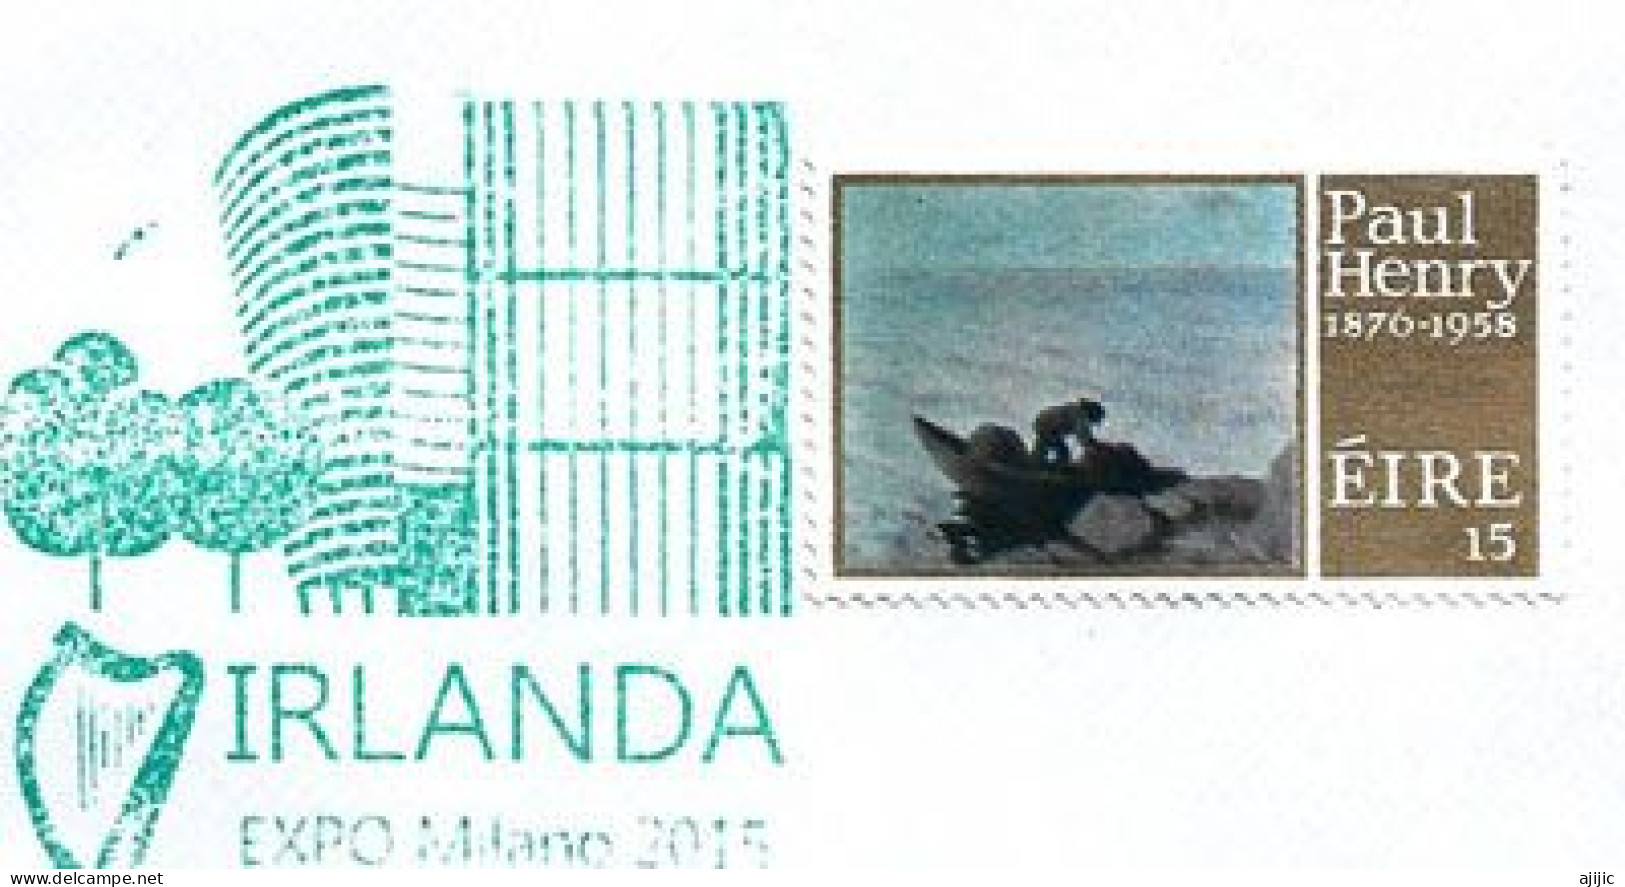 IRLAND / EIRE. EXPO UNIVERSELLE MILANO 2015., Lettre Avec Timbre Irlandais, Du Pavillon IRLANDE (rare) - Brieven En Documenten